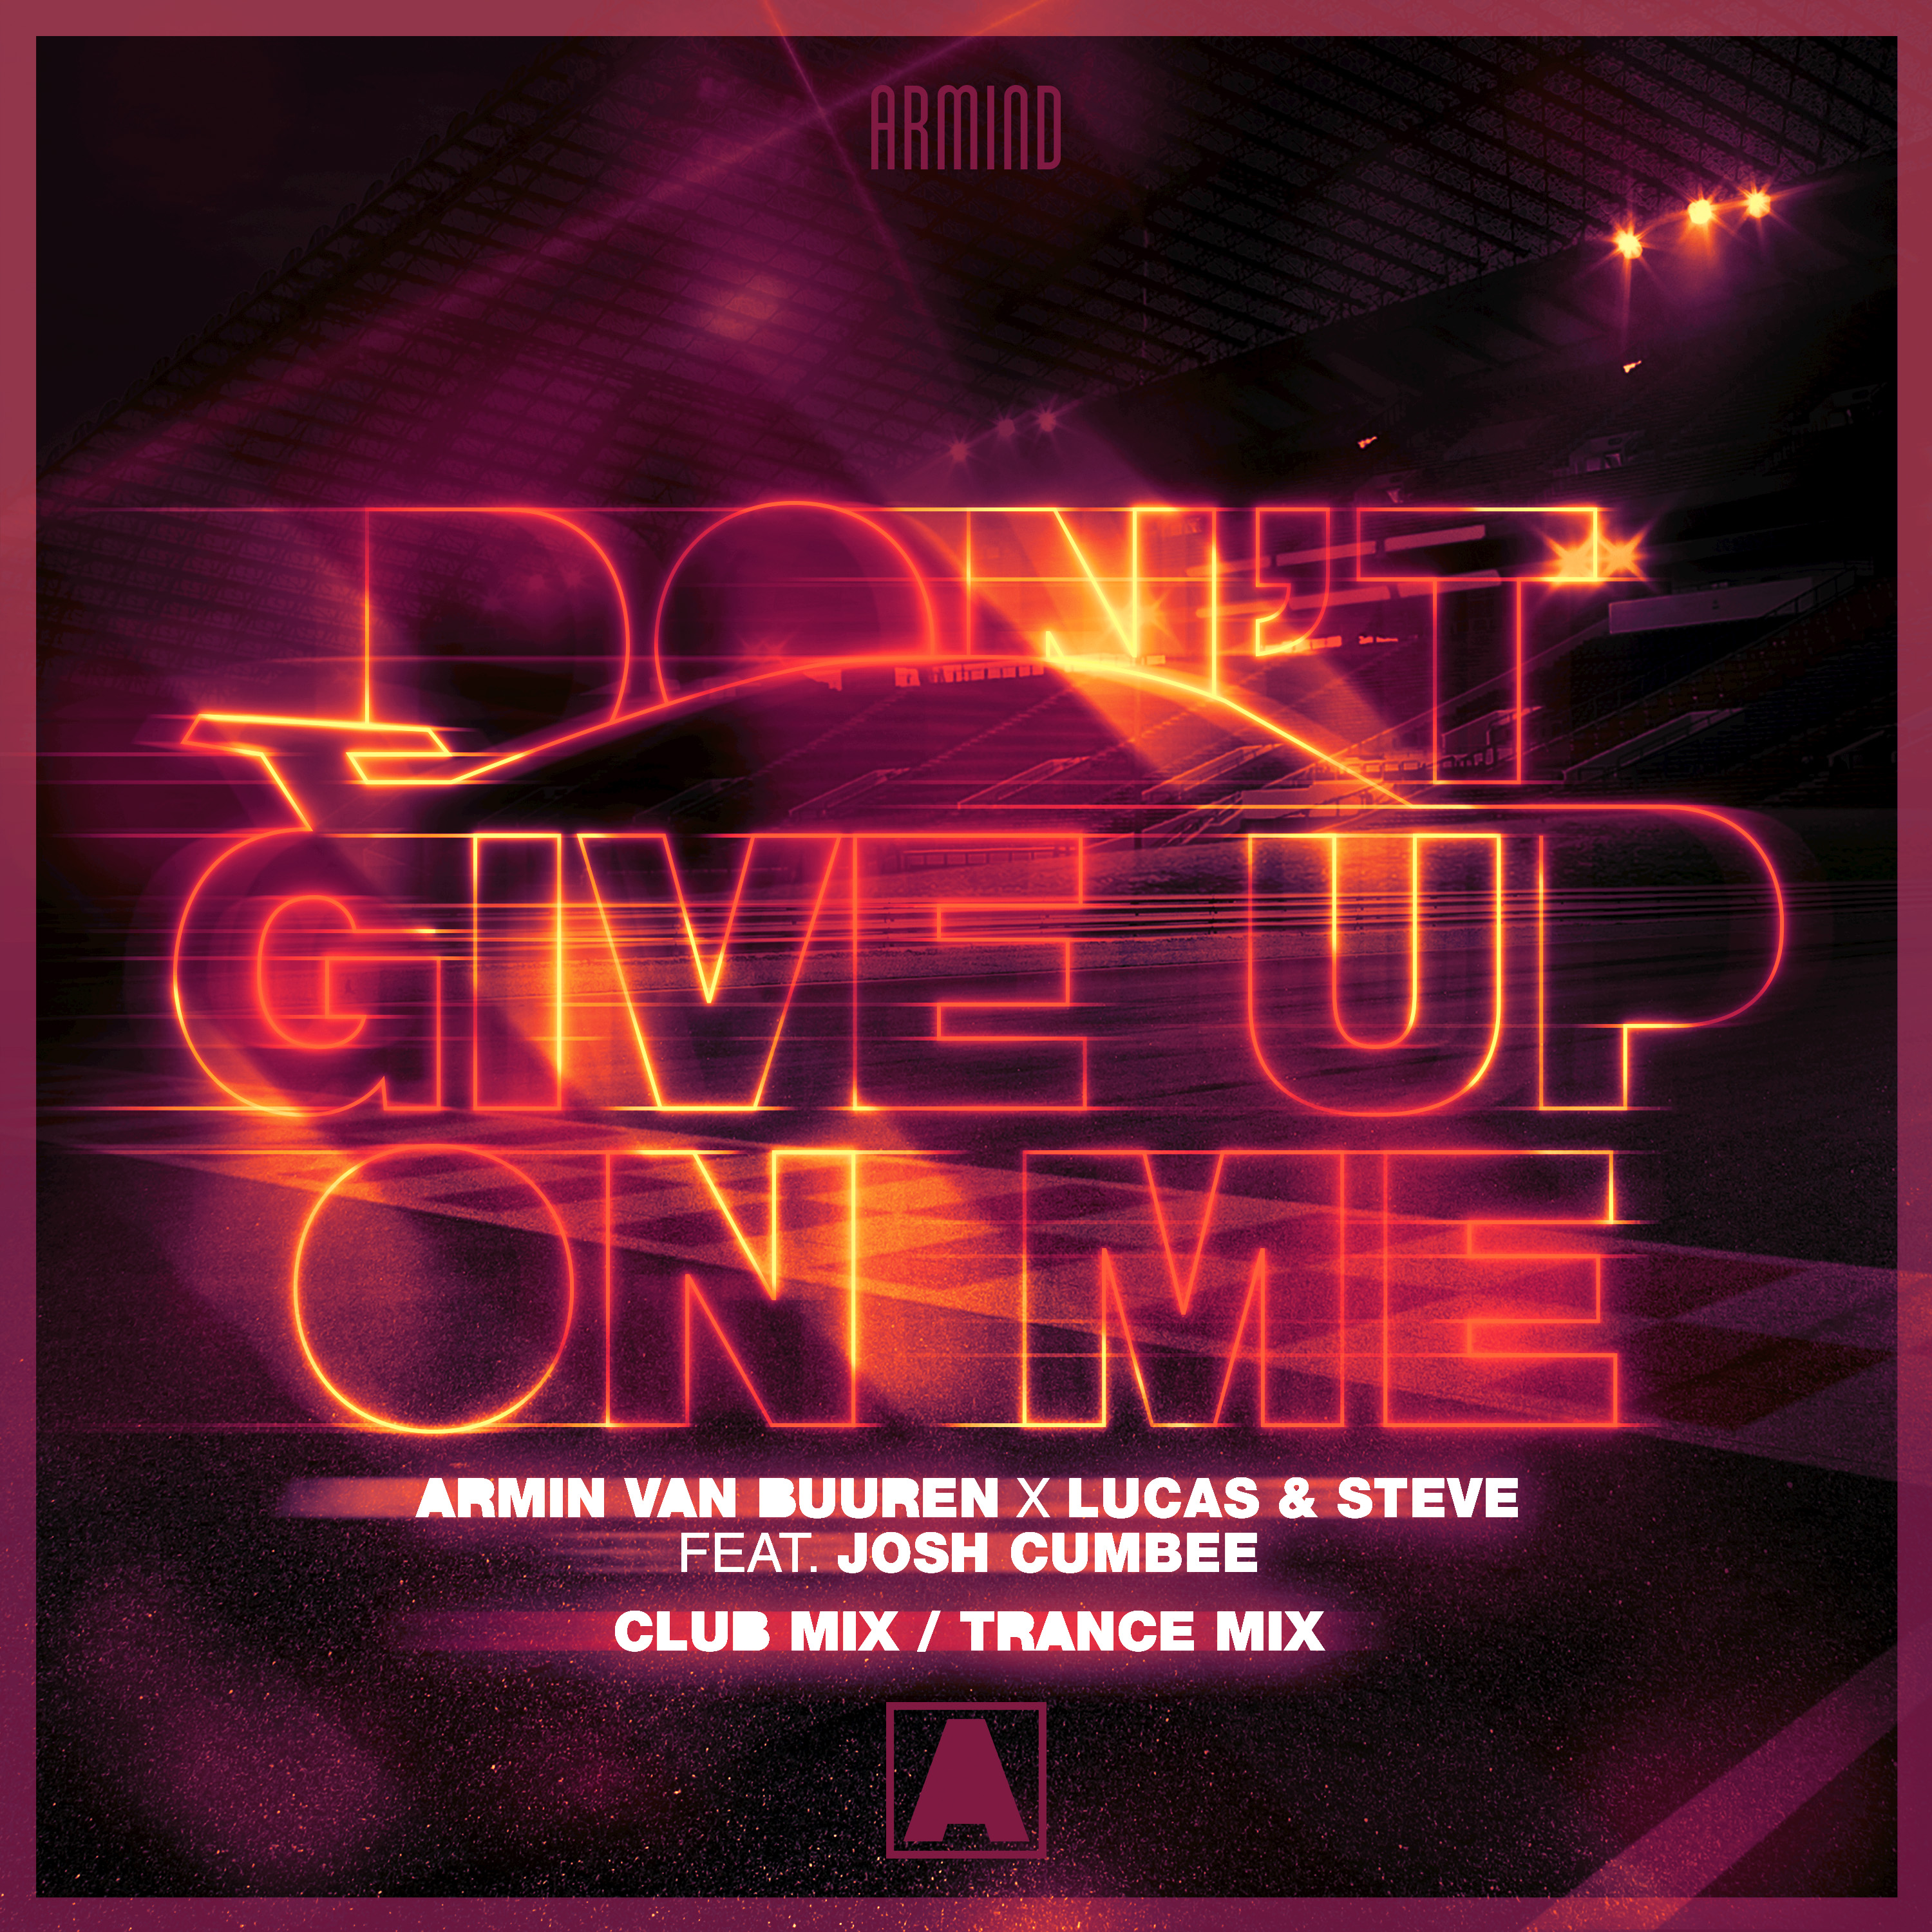 Armin van Buuren x Lucas & Steve feat. Josh Cumbee presents Don’t Give Up On Me (Club Mix / Trance Mix) on Armind / Armada Music